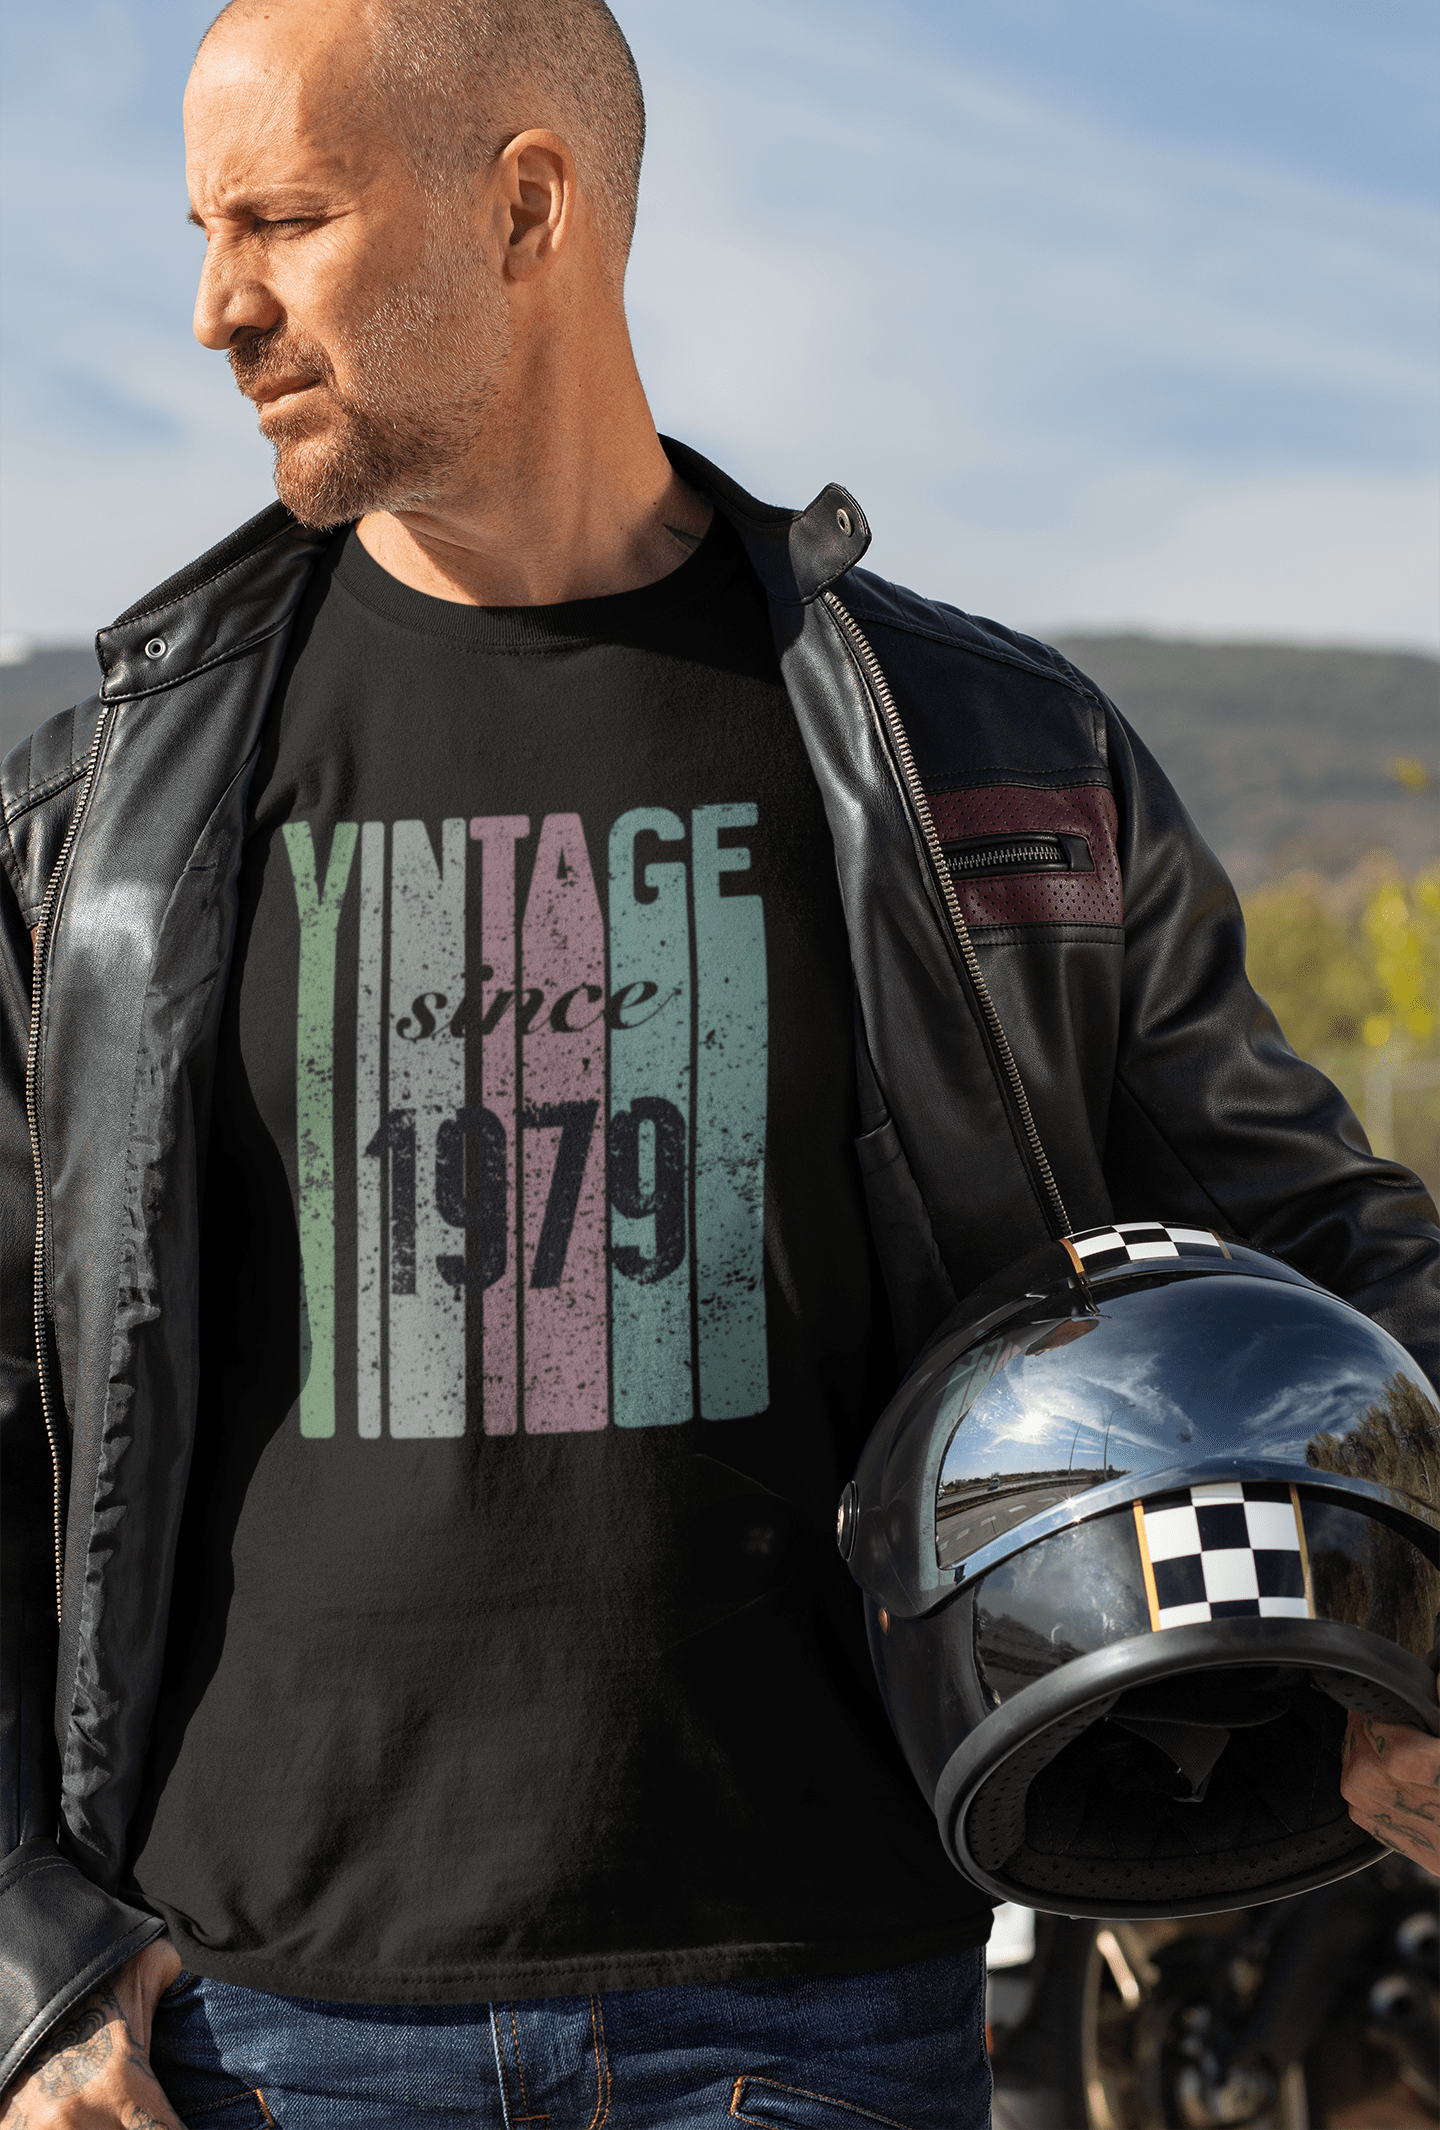 1979, Vintage Depuis 1979 T-shirt <span>Homme</span> <span>Noir</span> <span>Cadeau</span> <span>d'anniversaire</span> 00502